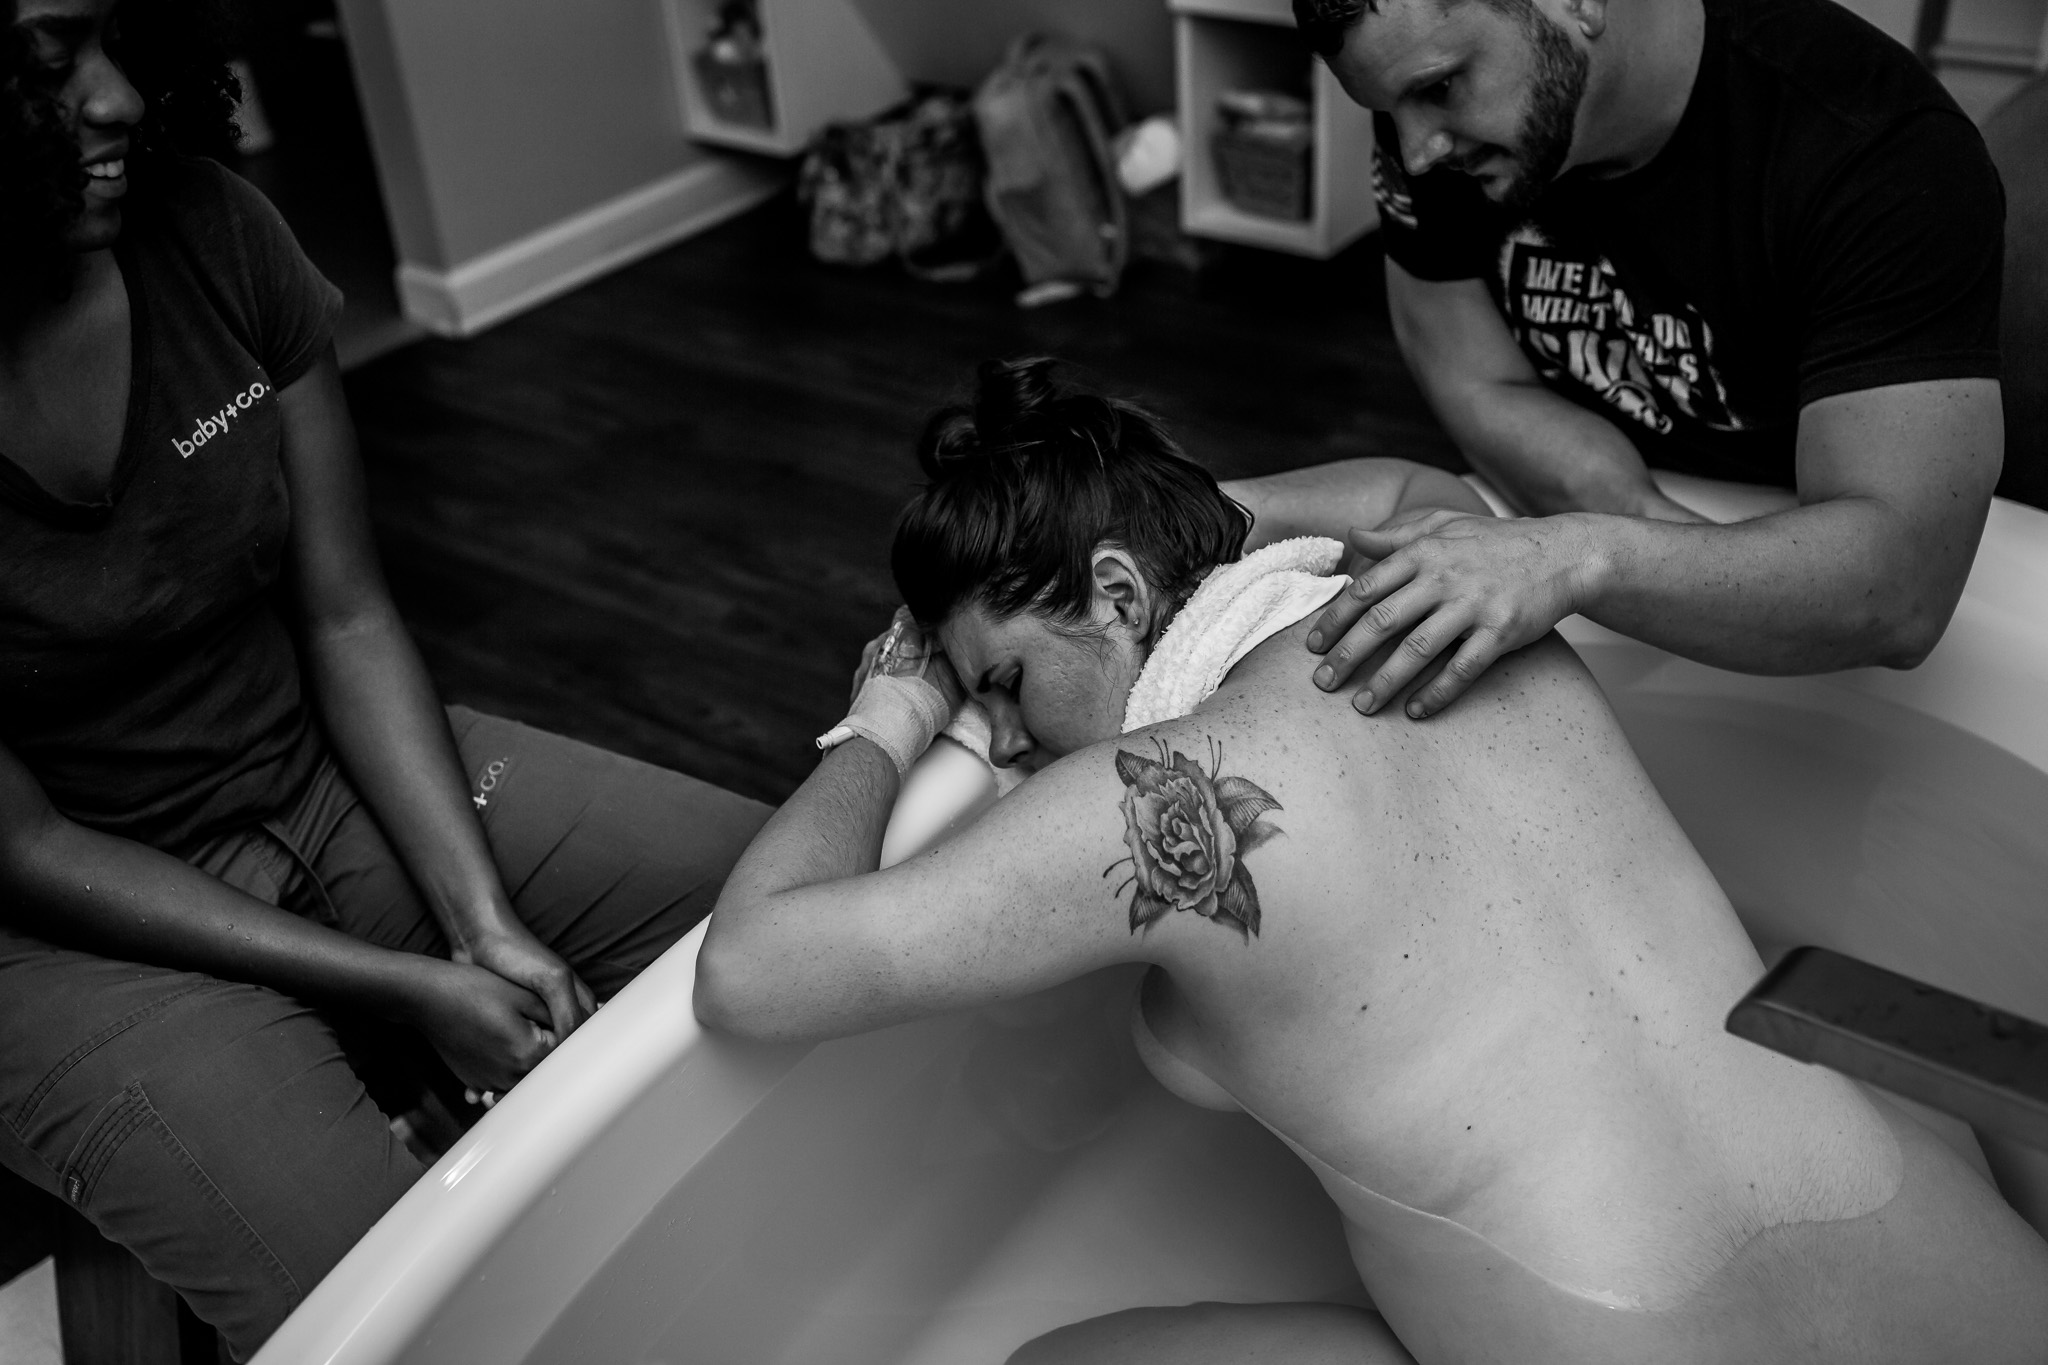 woman puts head down in birth tub as husband rubs her back